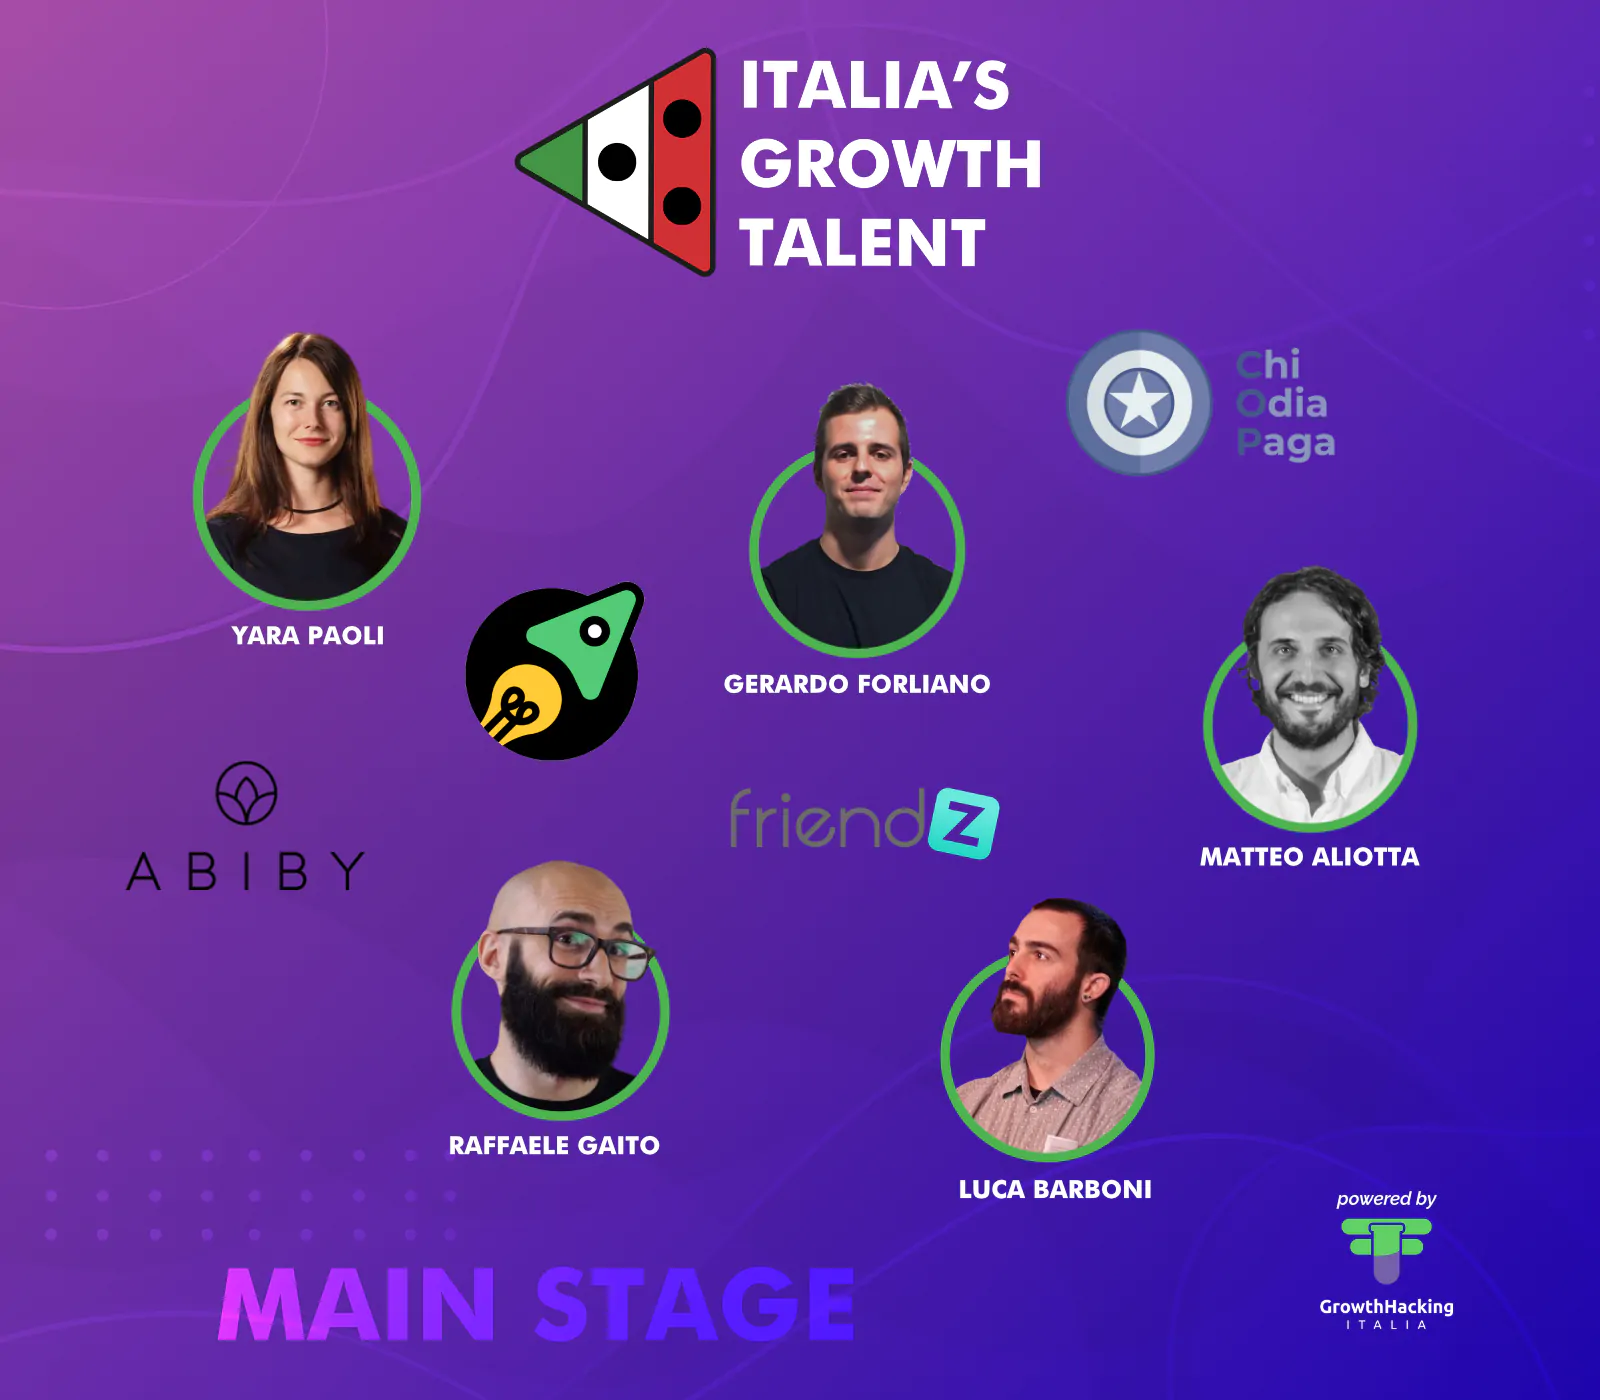 italias growth talent 2020 online